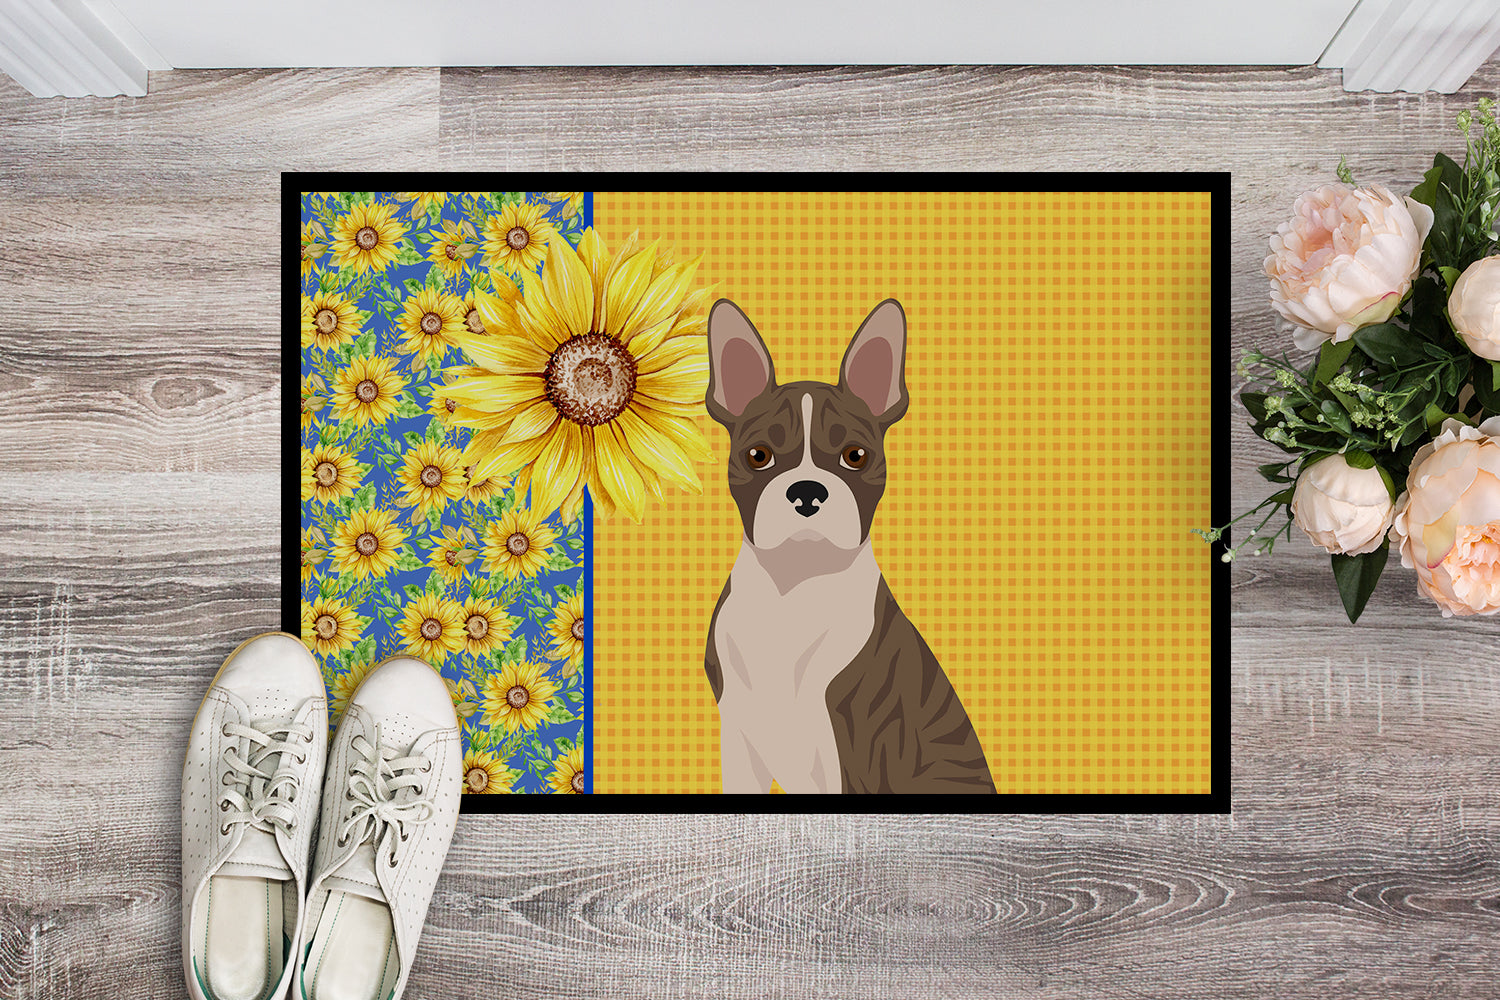 Buy this Summer Sunflowers Brindle Boston Terrier Indoor or Outdoor Mat 18x27